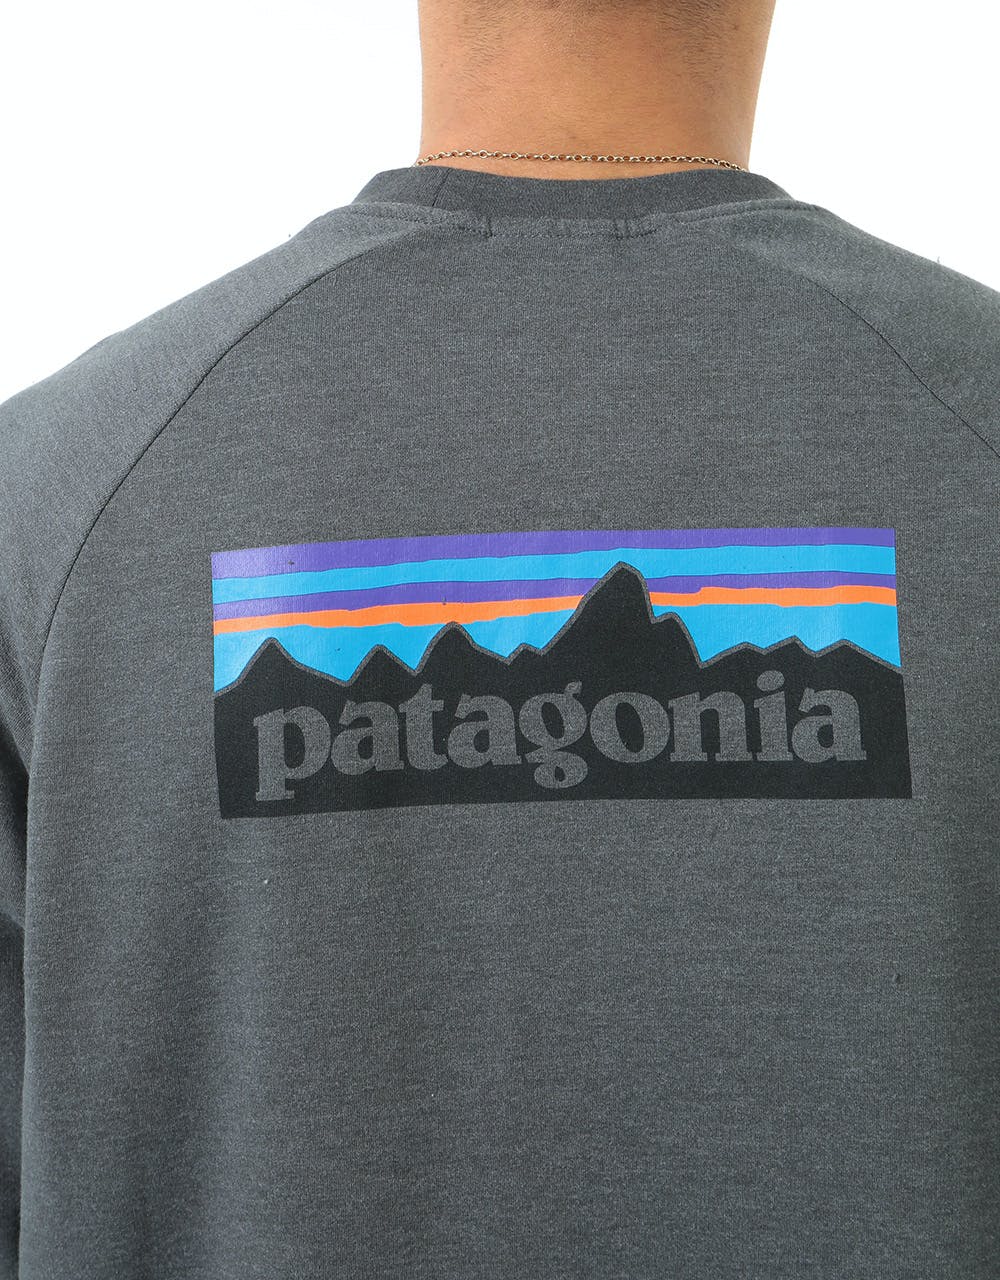 Patagonia P-6 Logo Lightweight Crew Sweatshirt - Forge Grey